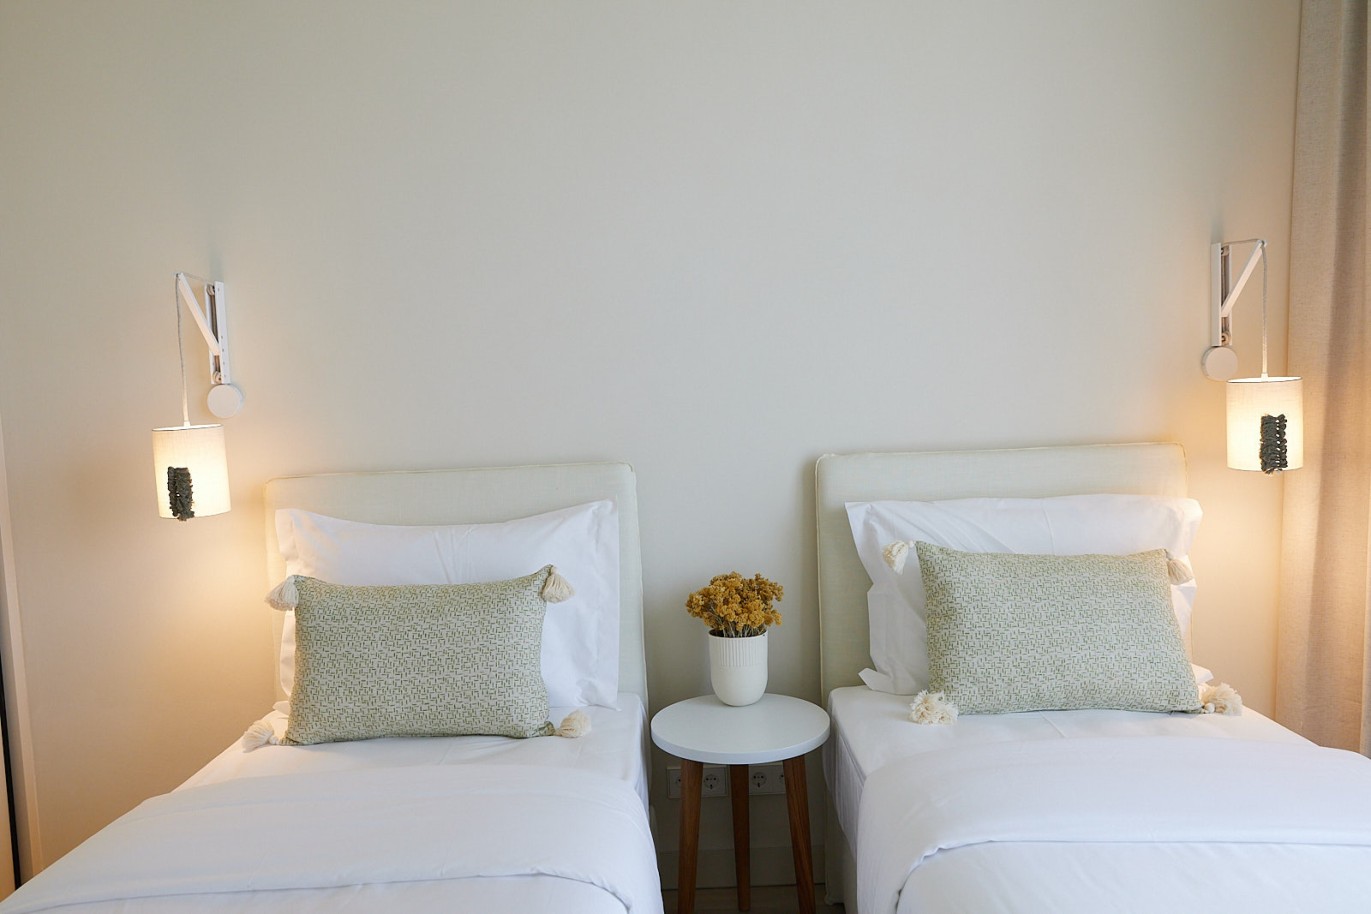 2 bedroom apartment in resort, for sale in Porches, Algarve_229199